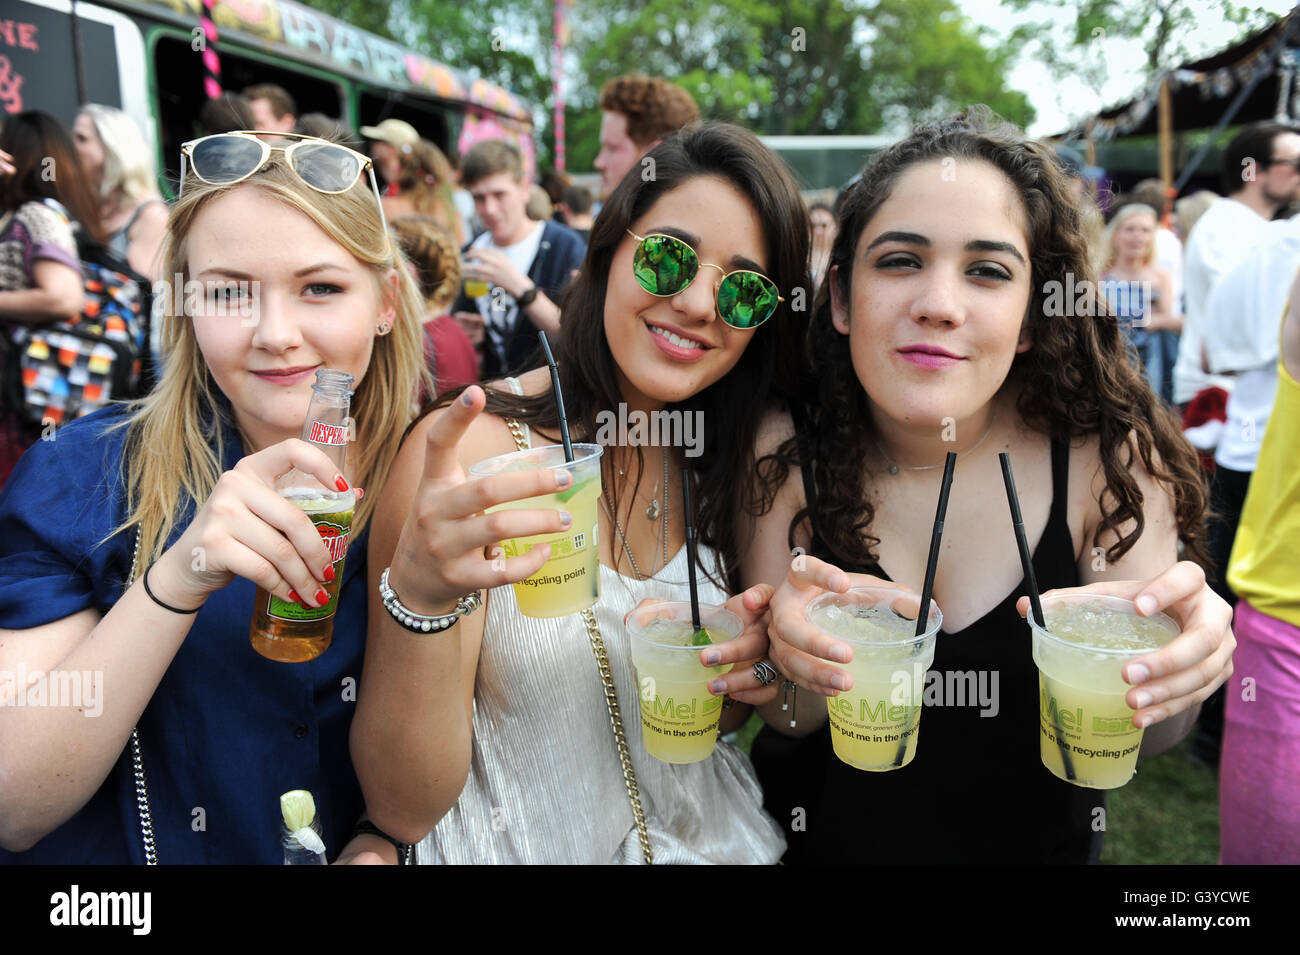 Teenage girls dancing drinking and smoking at music festival Stock Photo